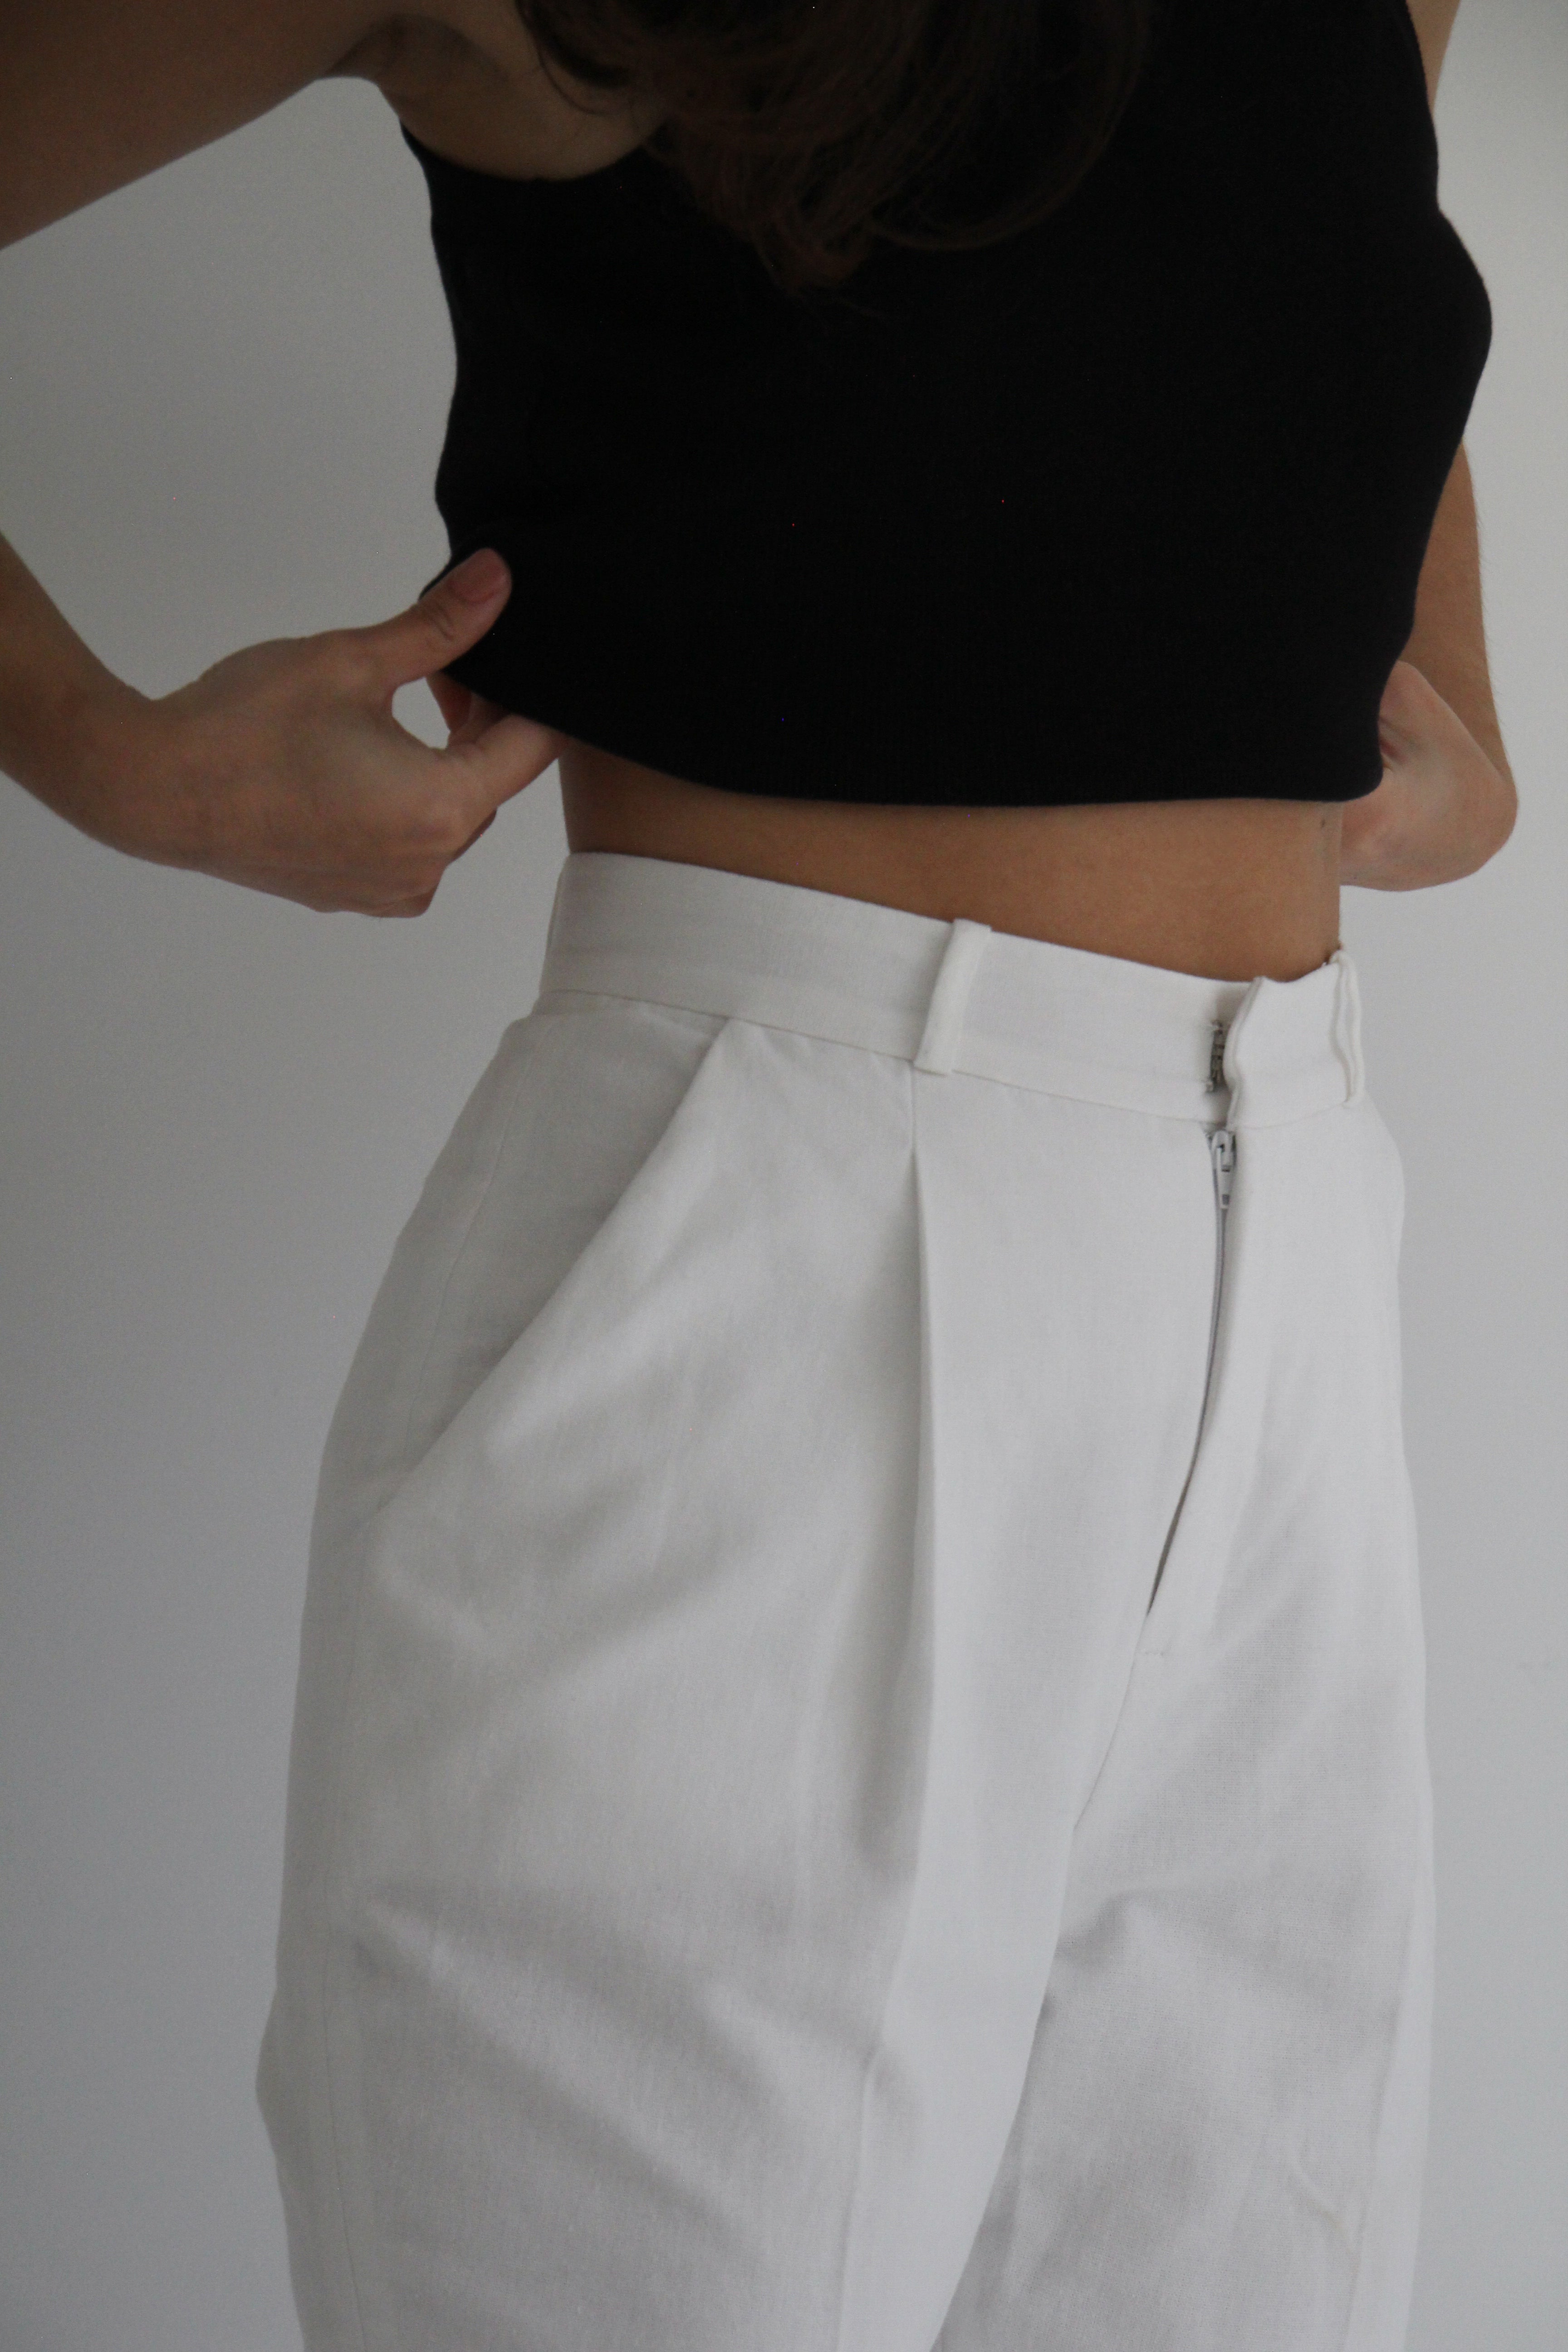 linen pants outfit ideas, classic, Scandinavian style